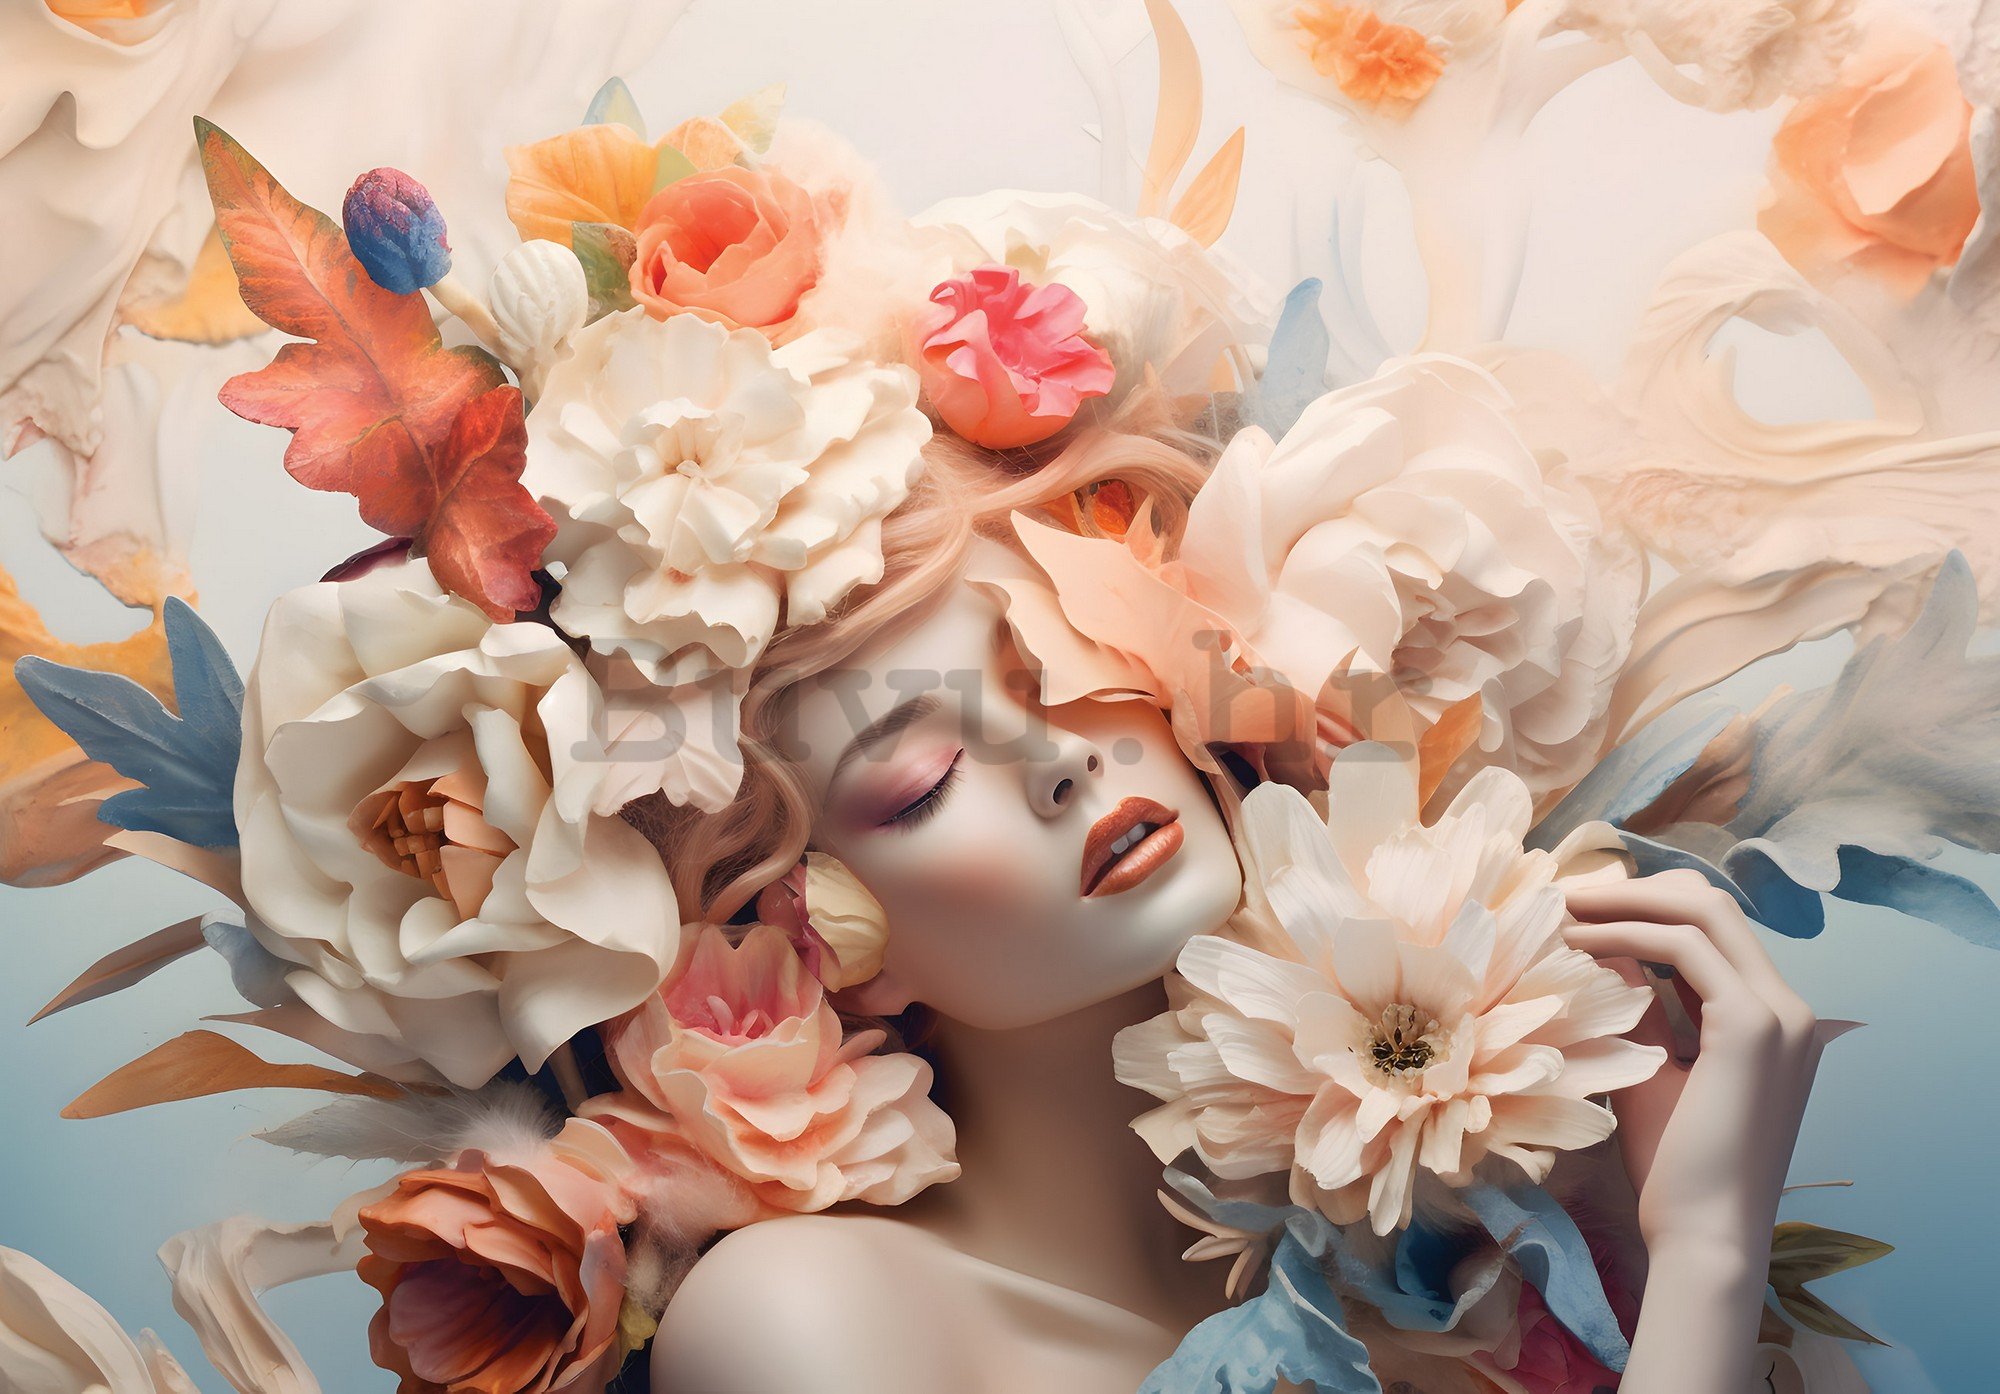 Vlies foto tapeta: Woman flowers pastel elegance - 312x219cm